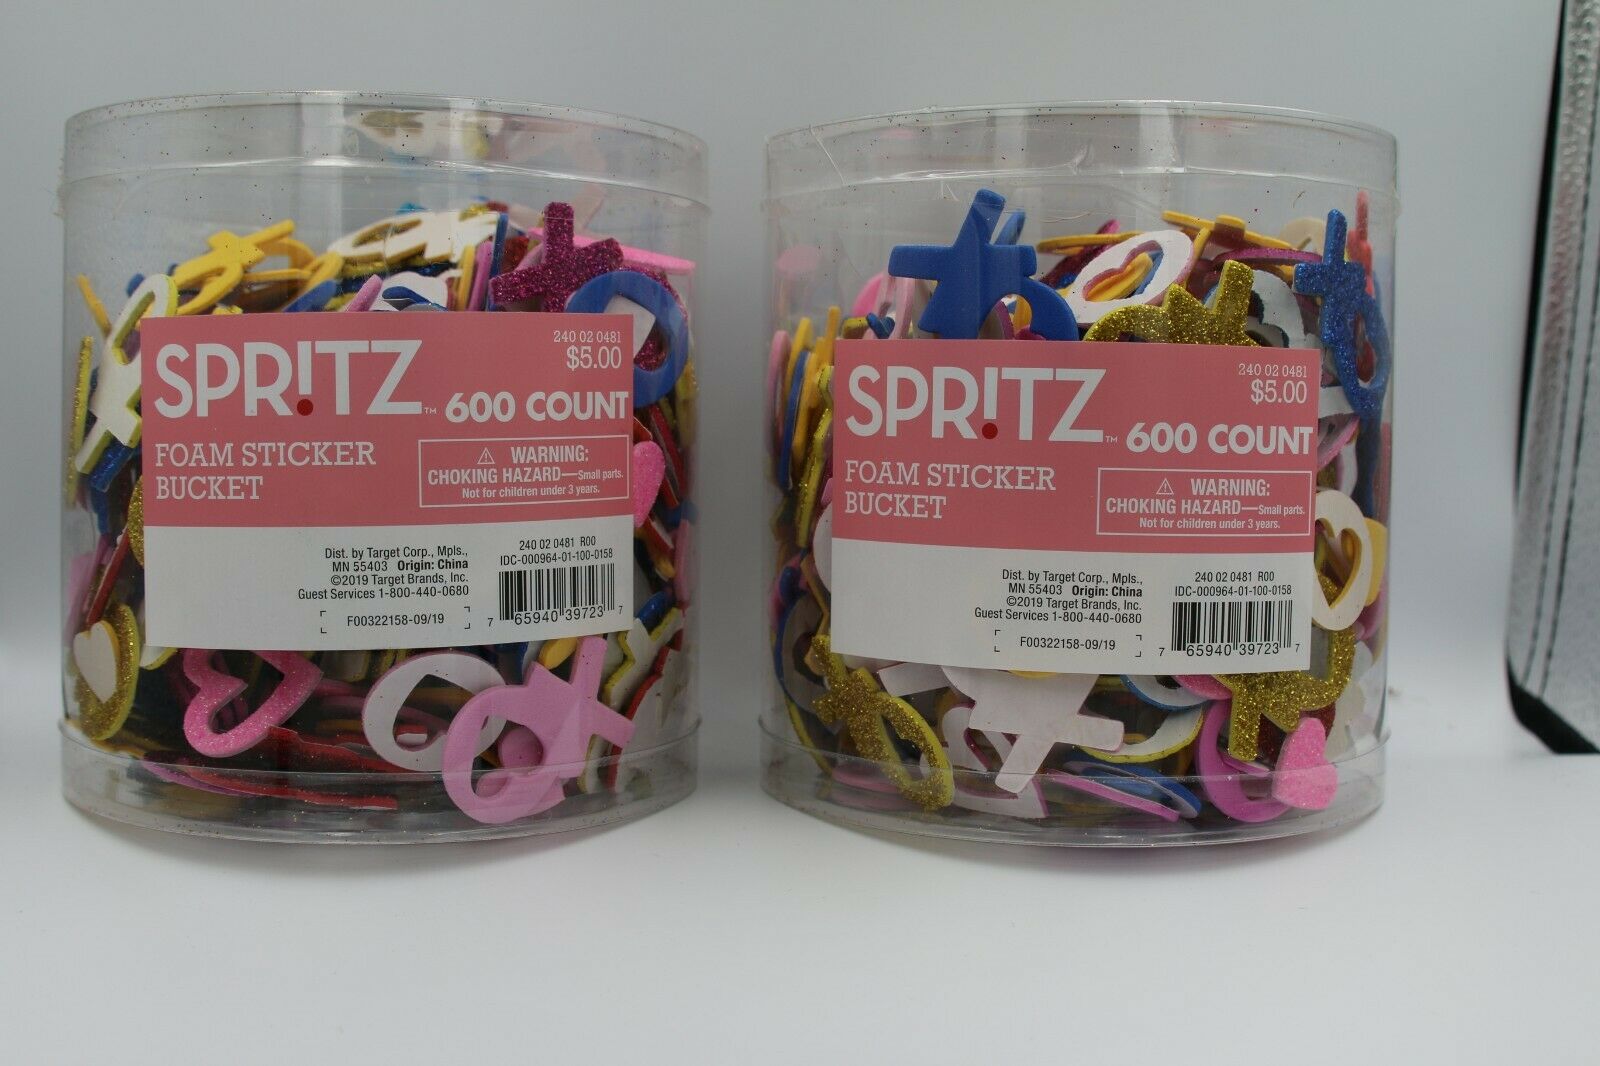 Spritz Foam Sticker Bucket, 600 Count (2 Pack, 1200 Stickers In All)